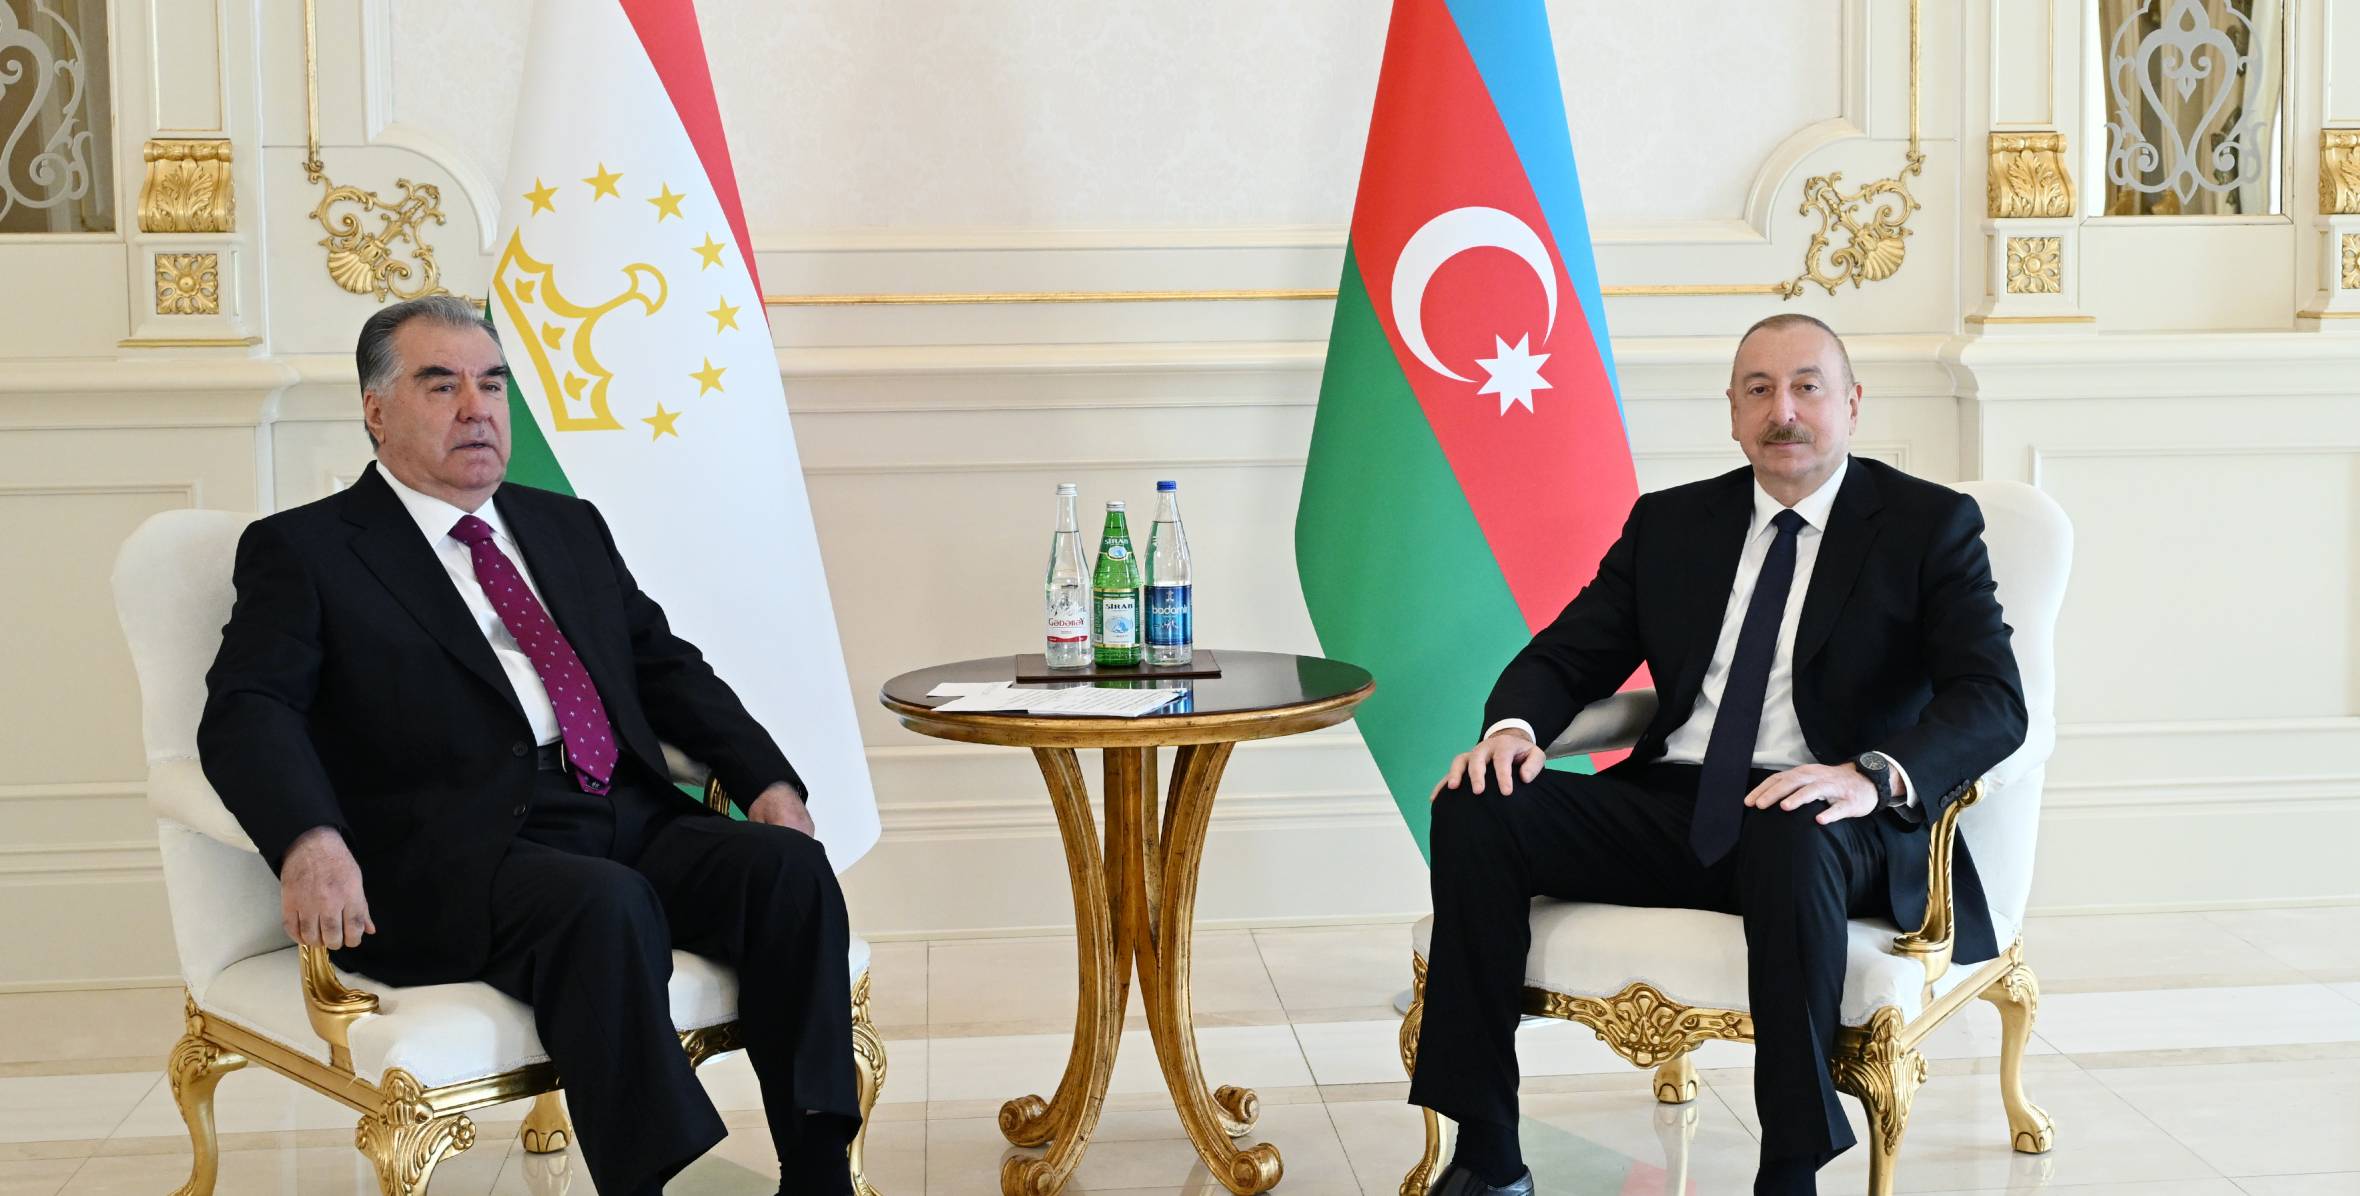 lham Aliyev held one-on-one meeting with President of Tajikistan Emomali Rahmon